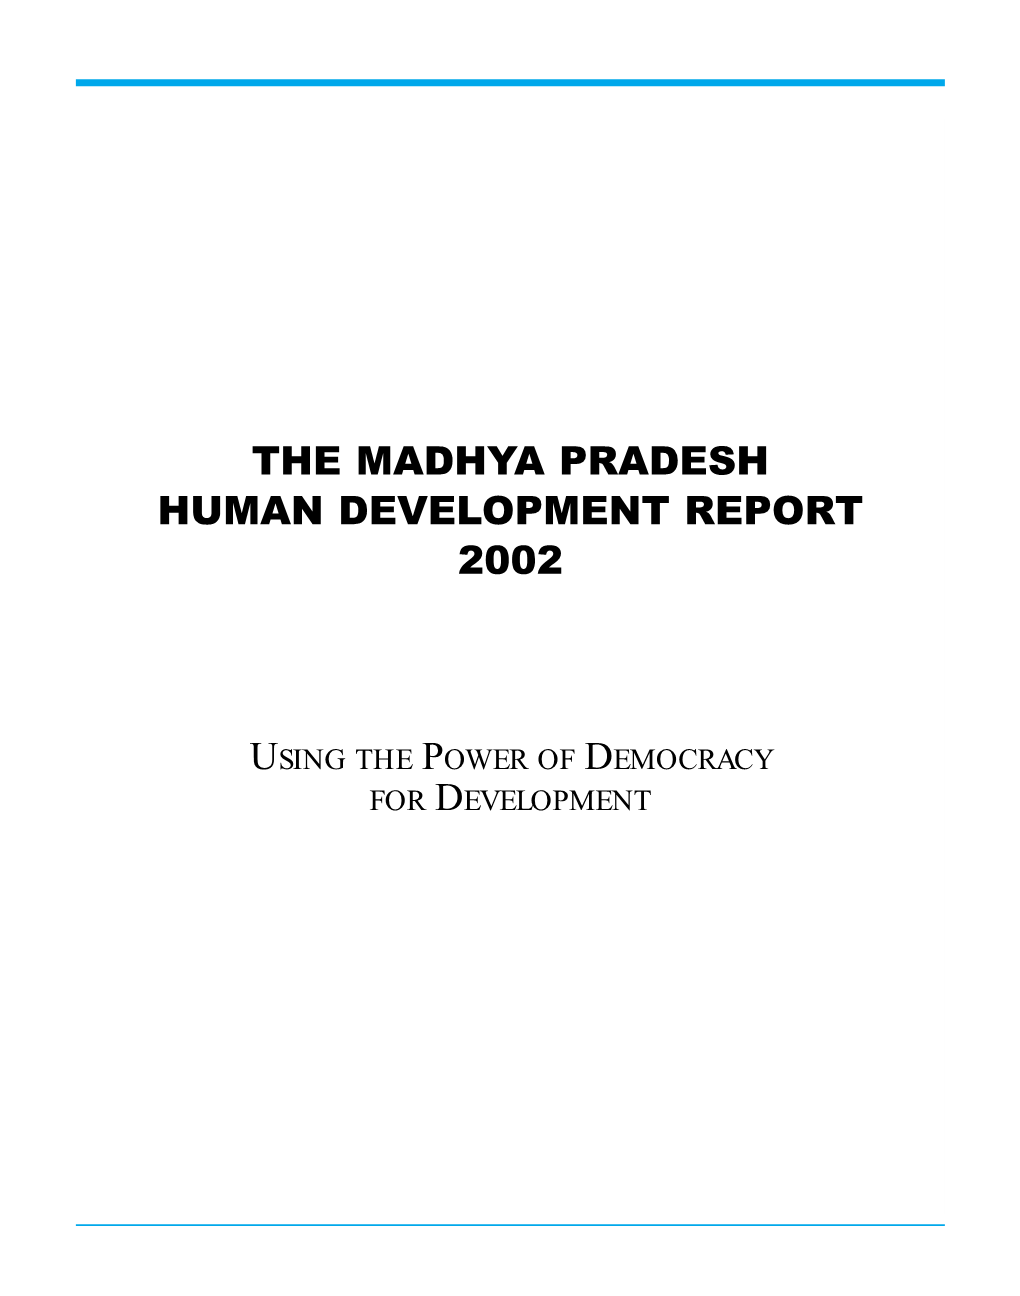 Madhya Pradesh 2002